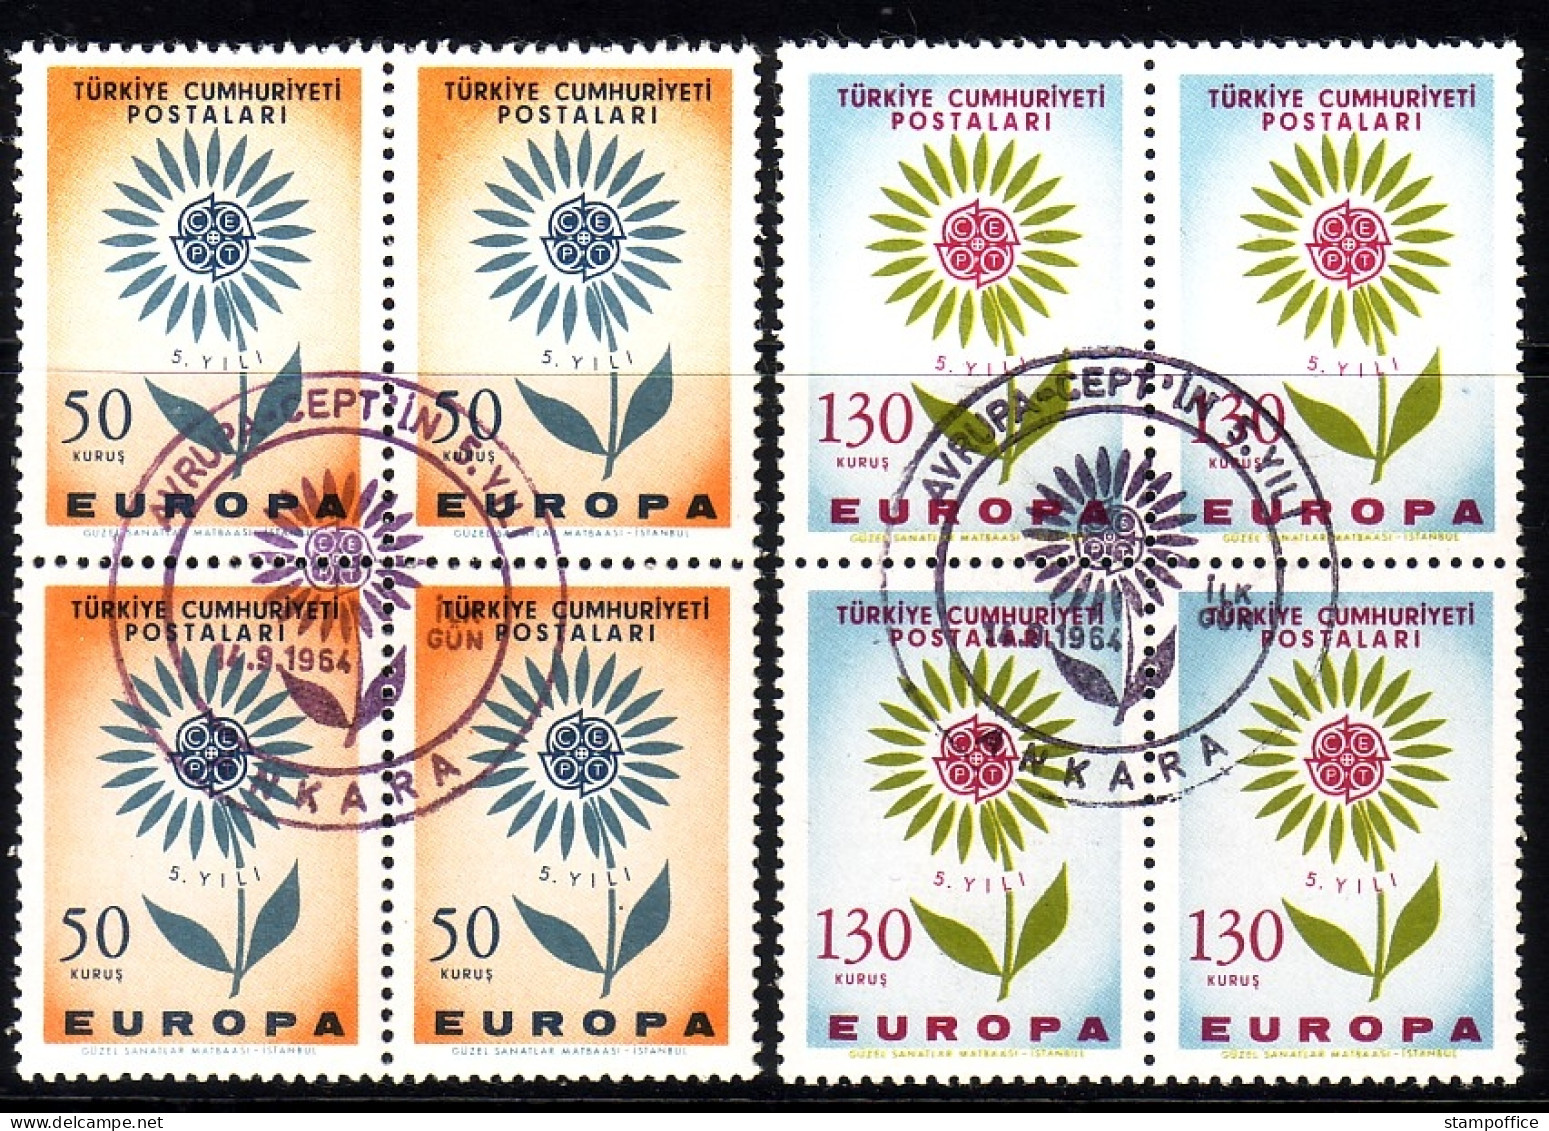 TÜRKEI MI-NR. 1917-1918 GESTEMPELT(USED) 4er BLOCK EUROPA 1964 - 1964